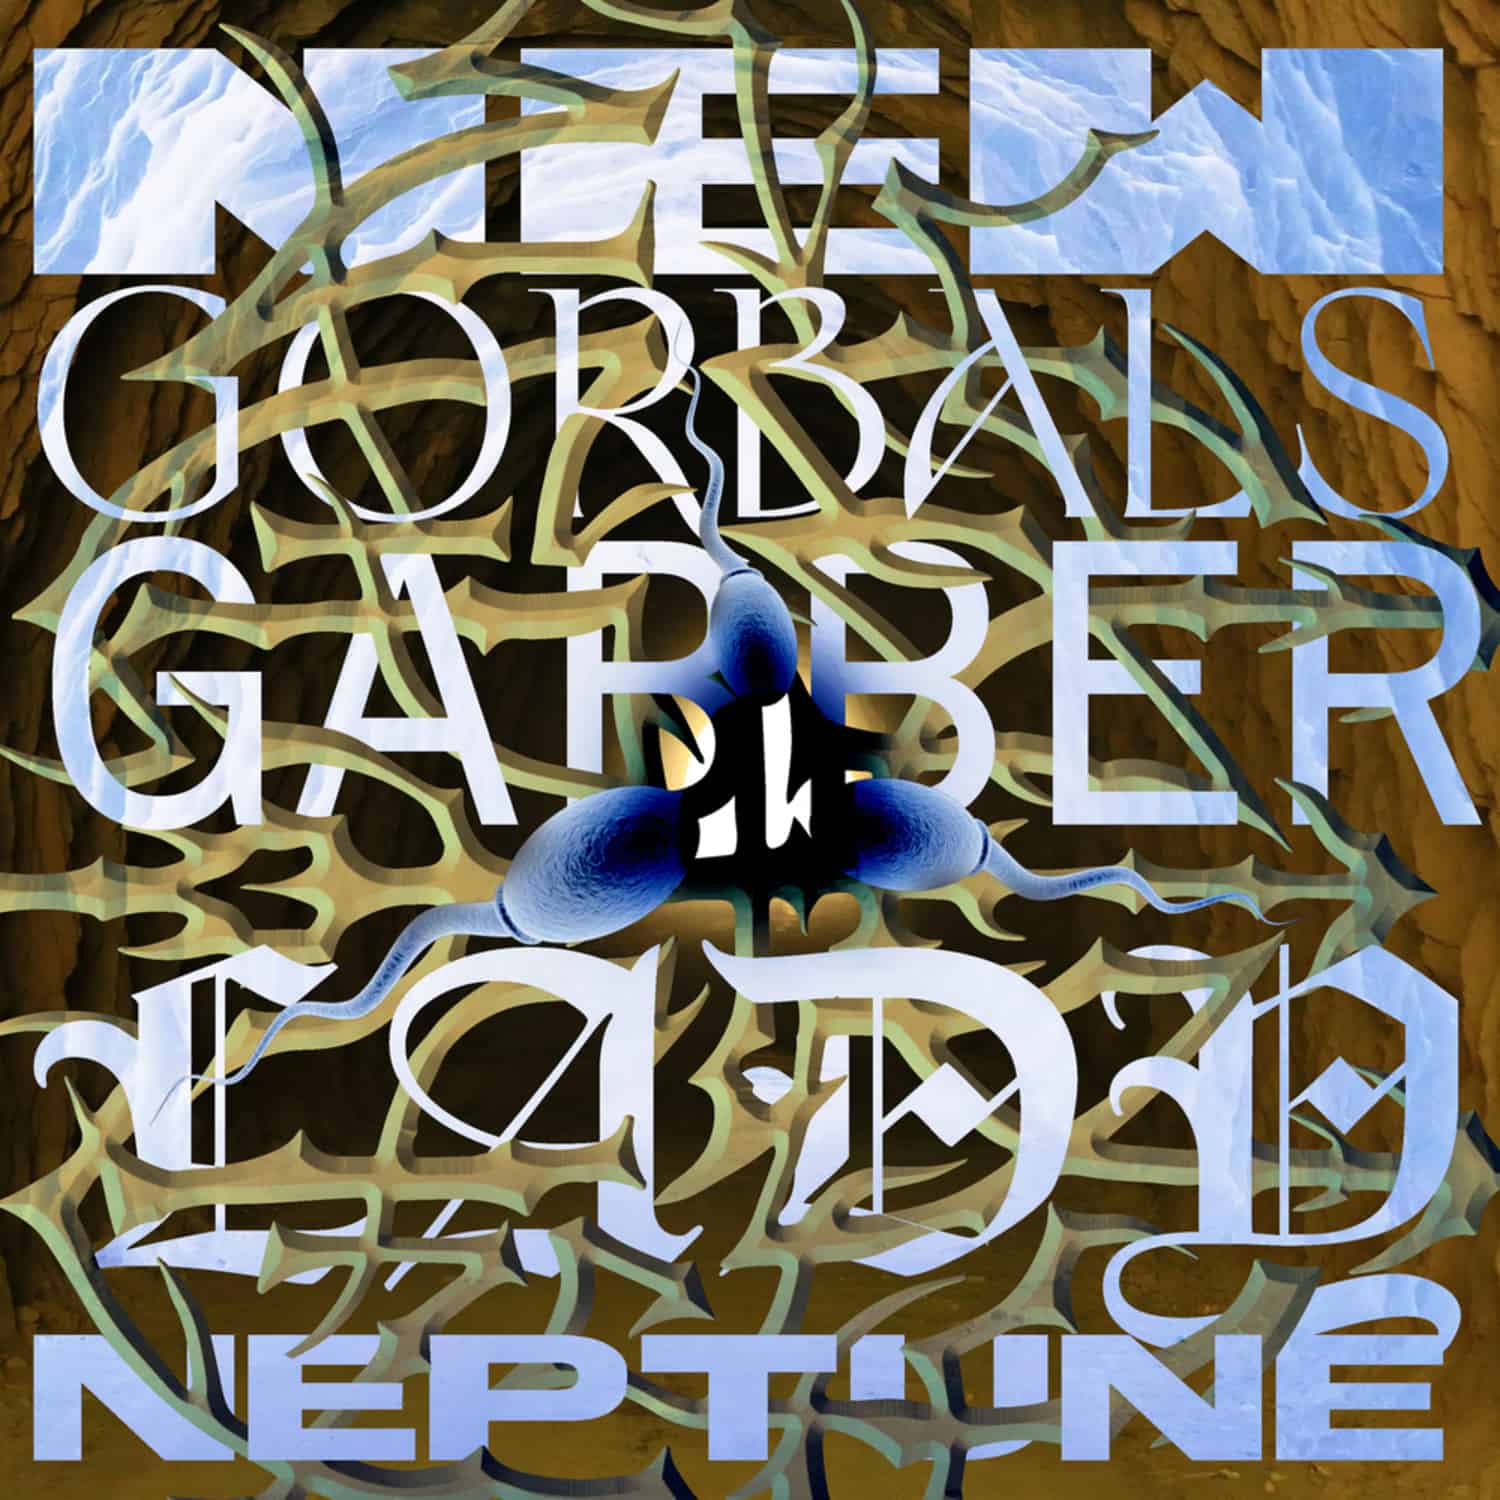 Lady Neptune - NEW GORBALS GABBER 